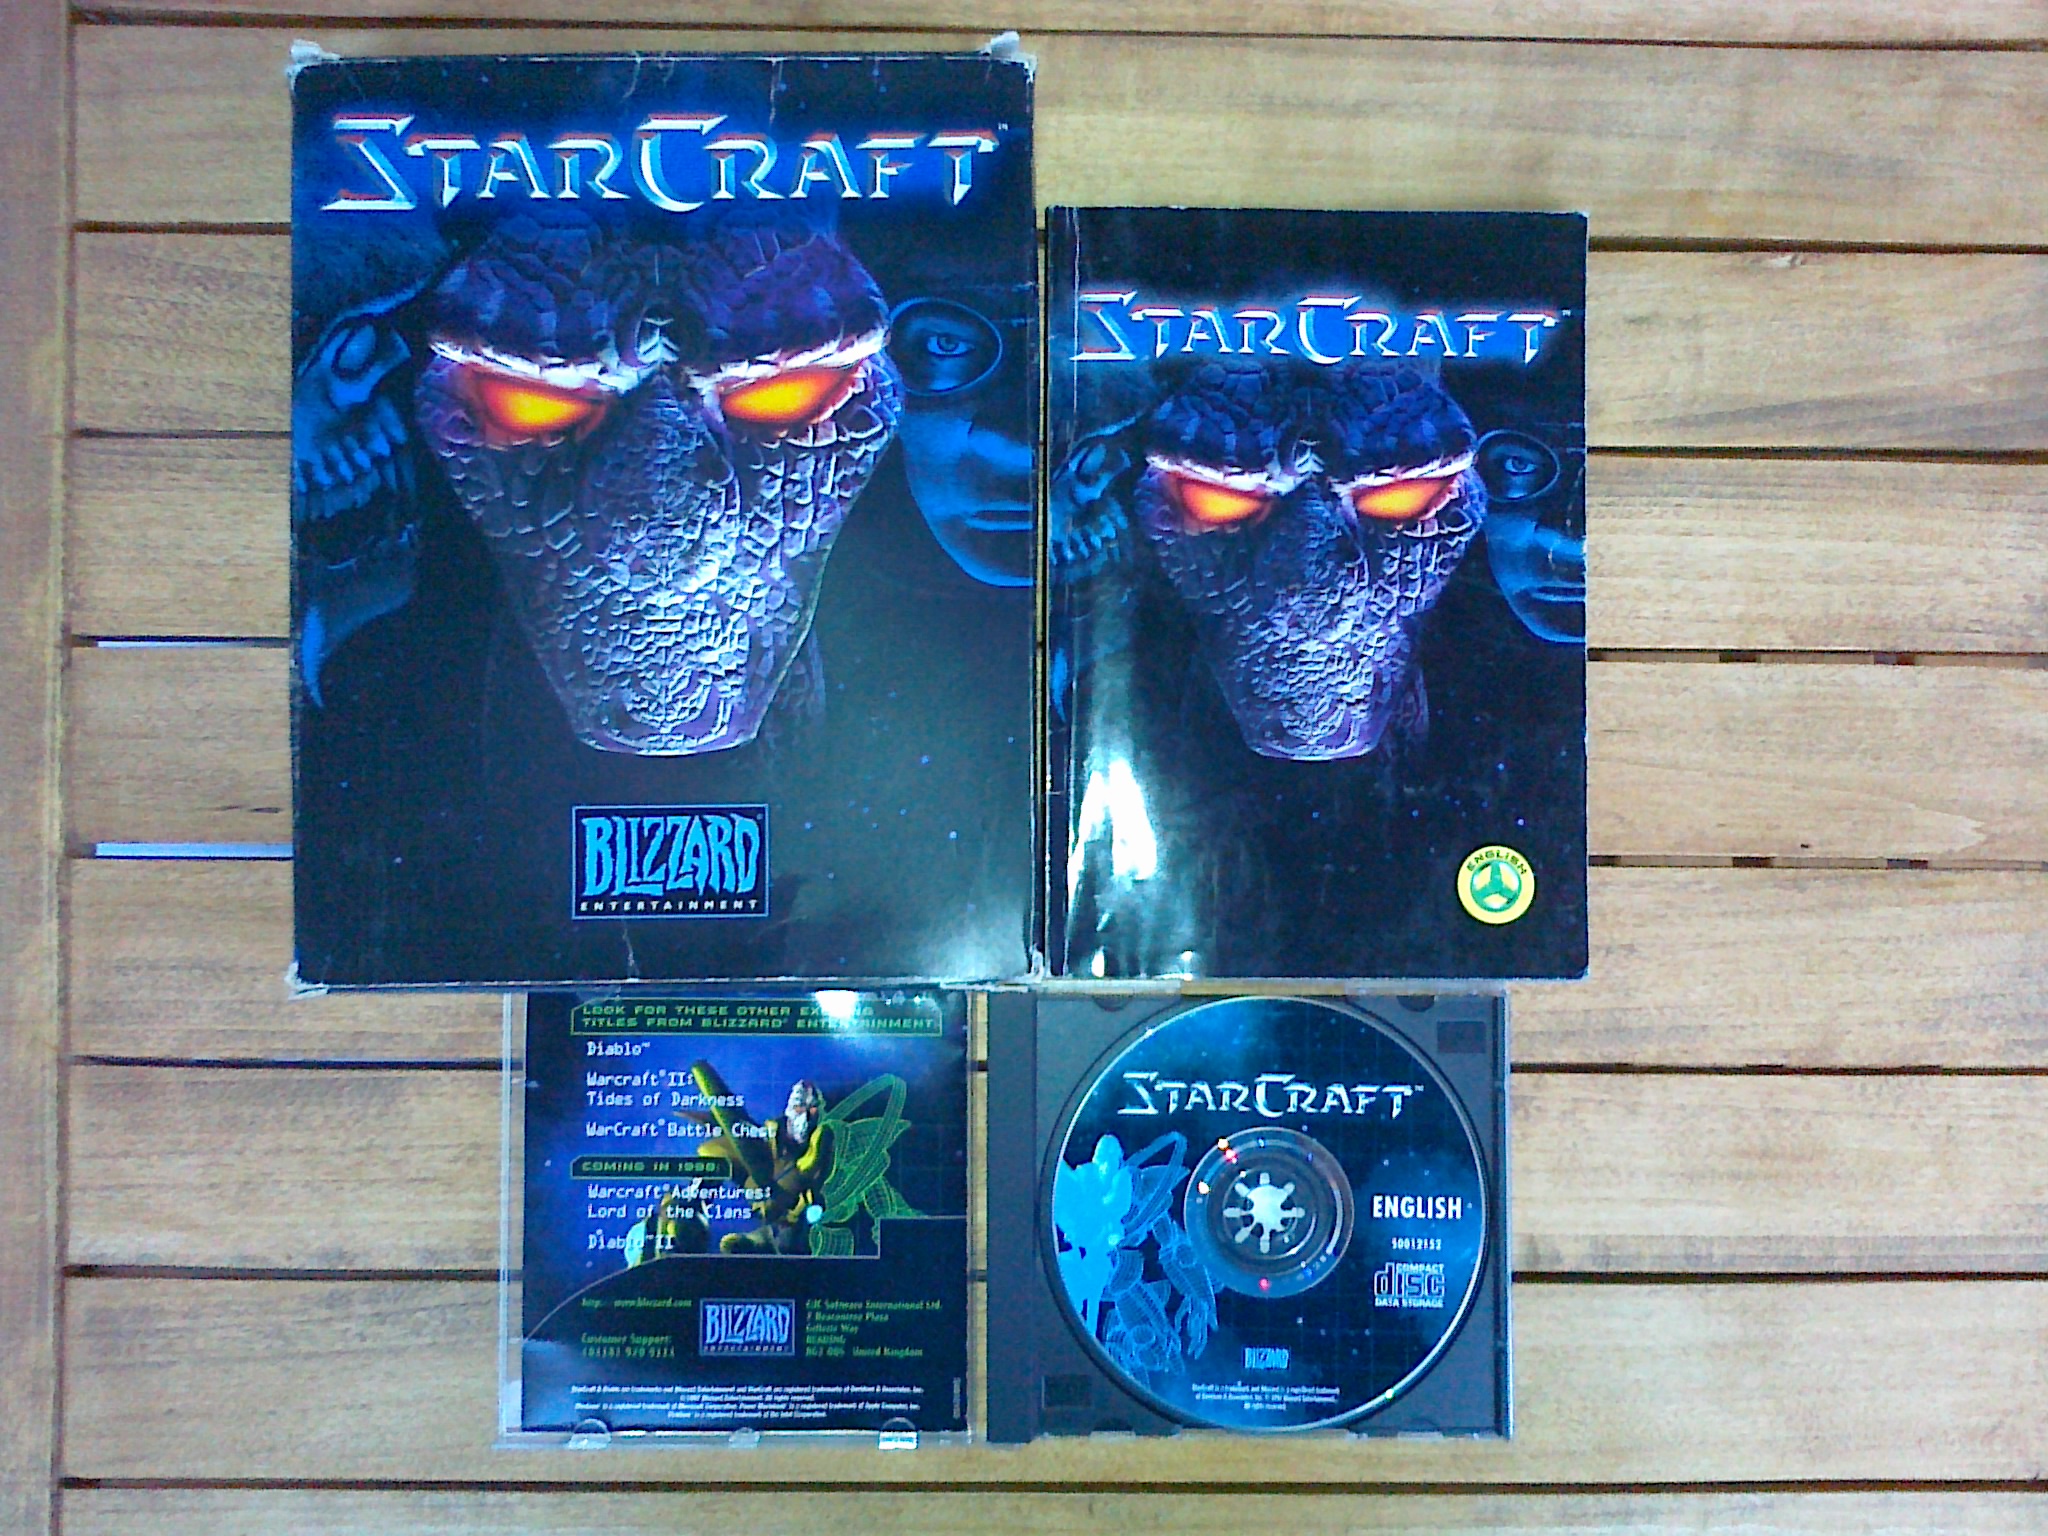 Starcraft.jpg